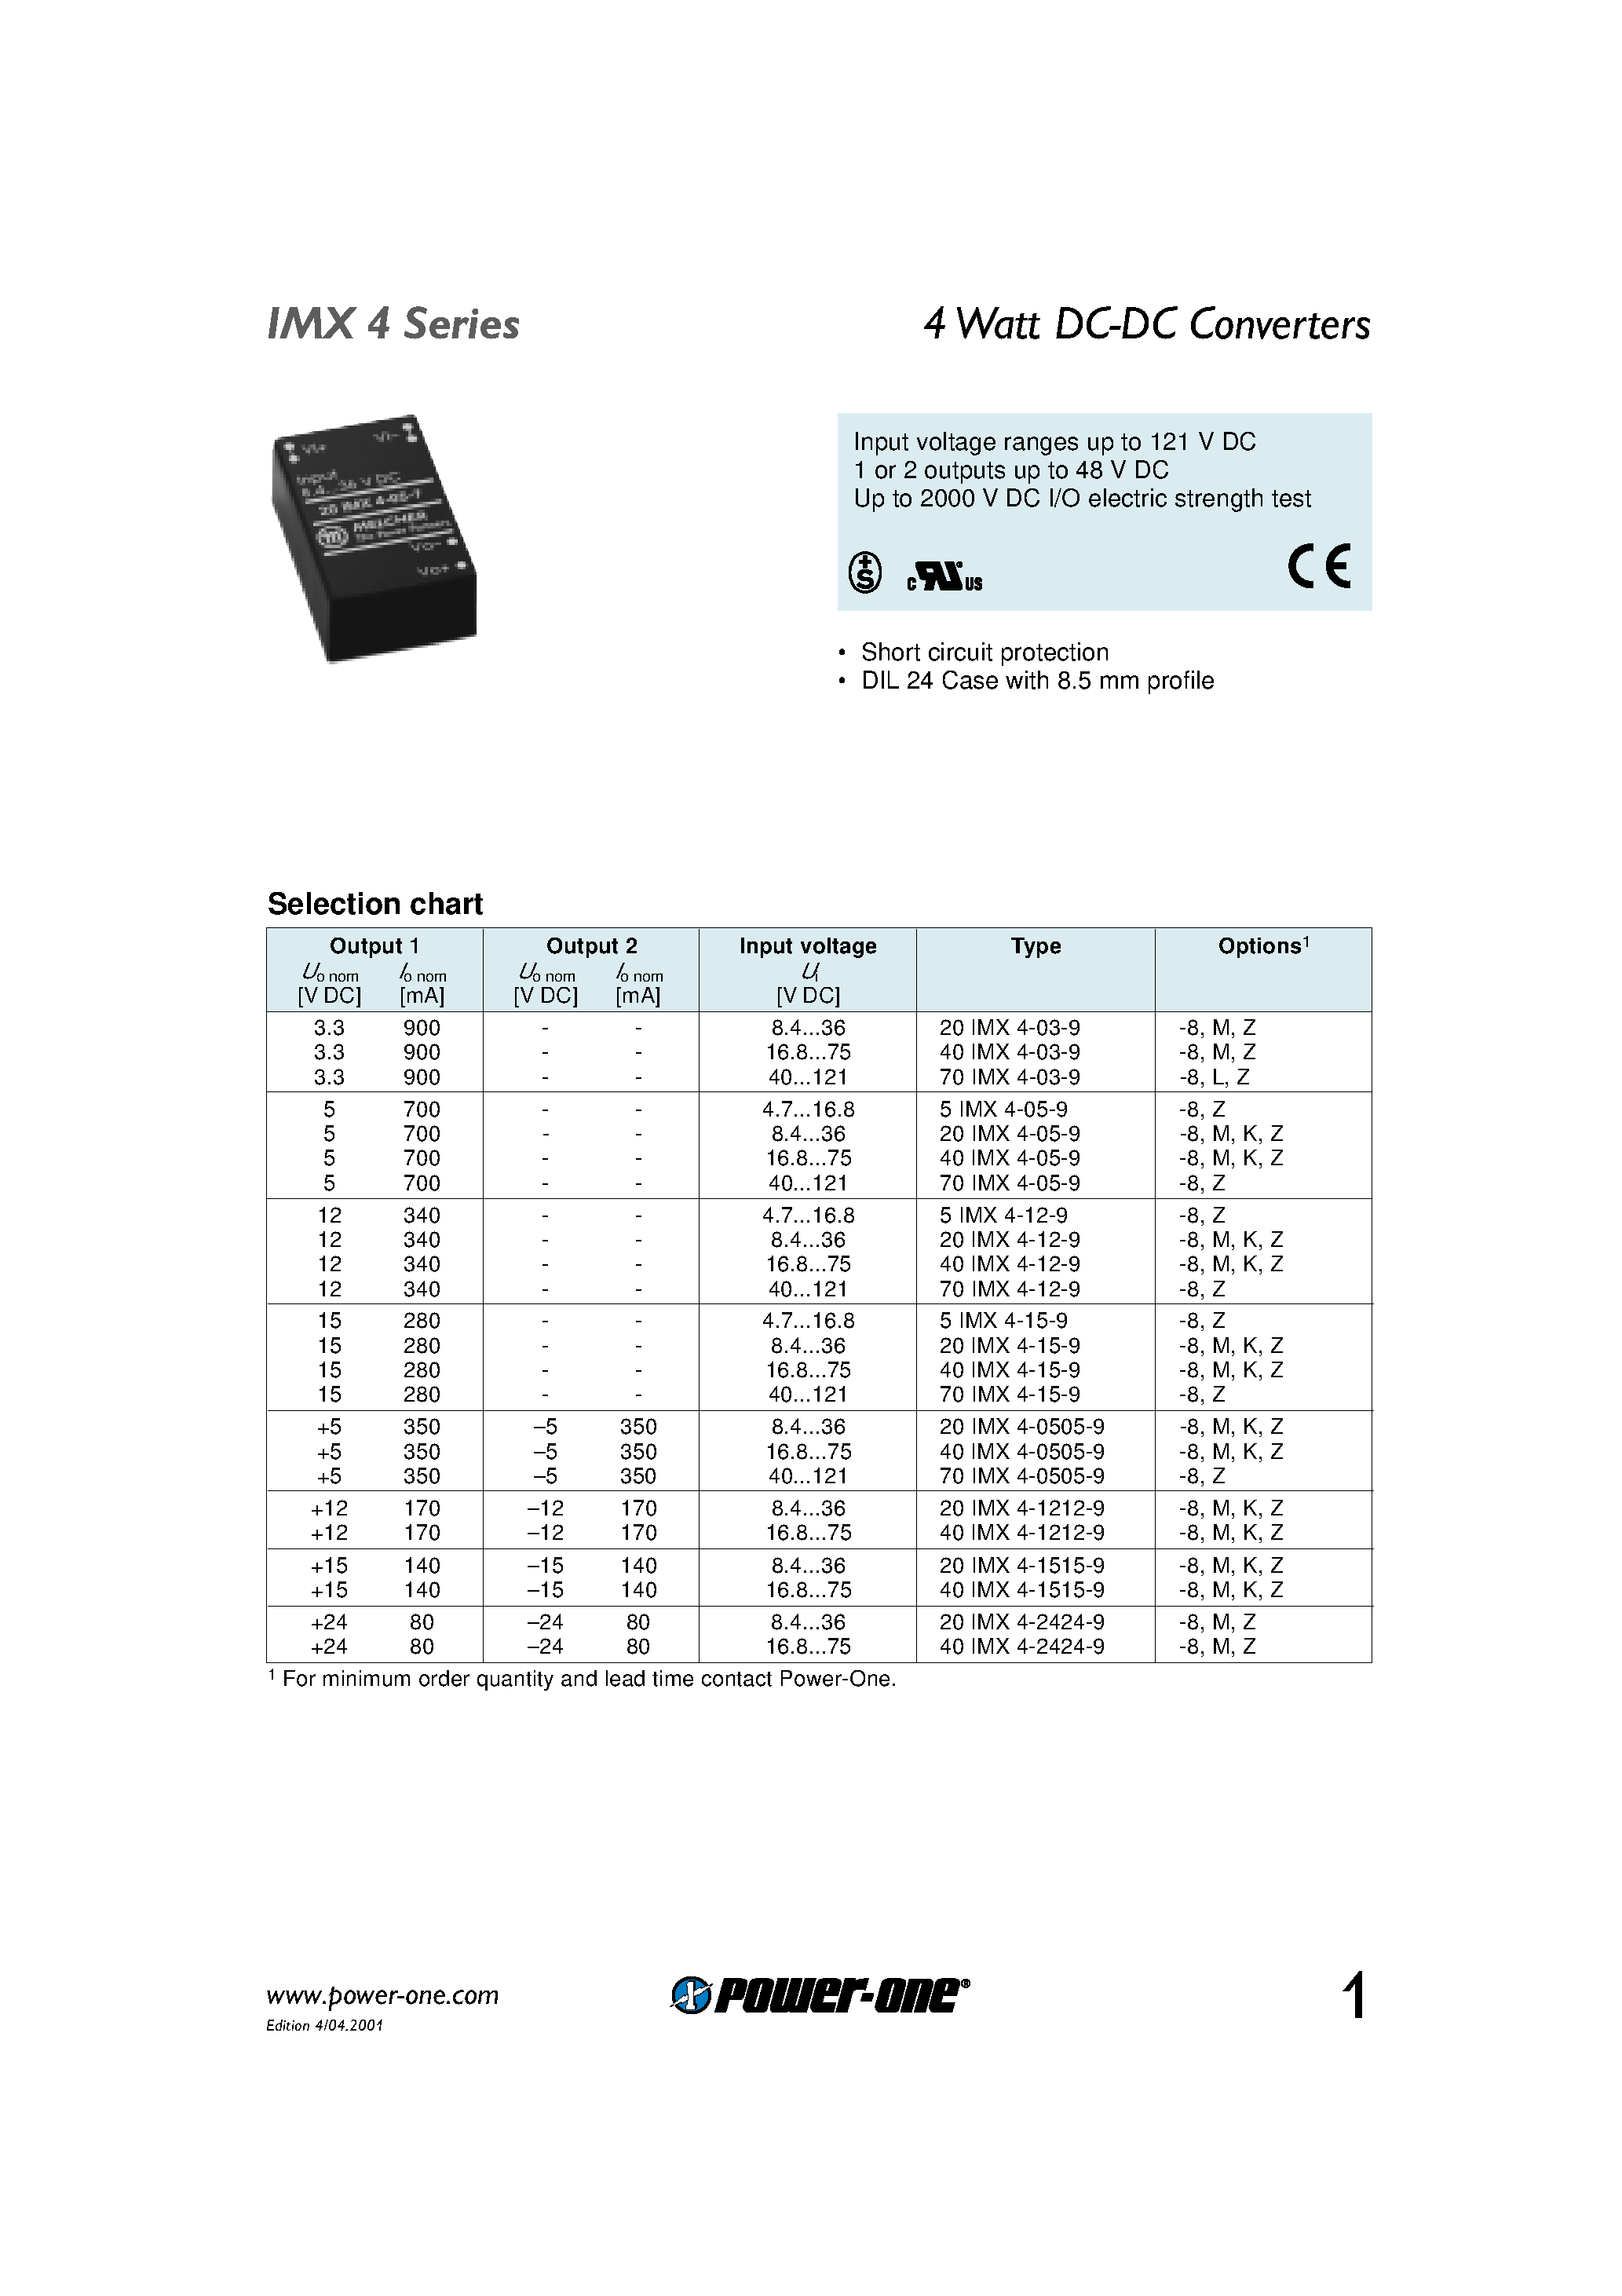 Даташит 70IMX4-15-9 - 4 Watt DC-DC Converters страница 1